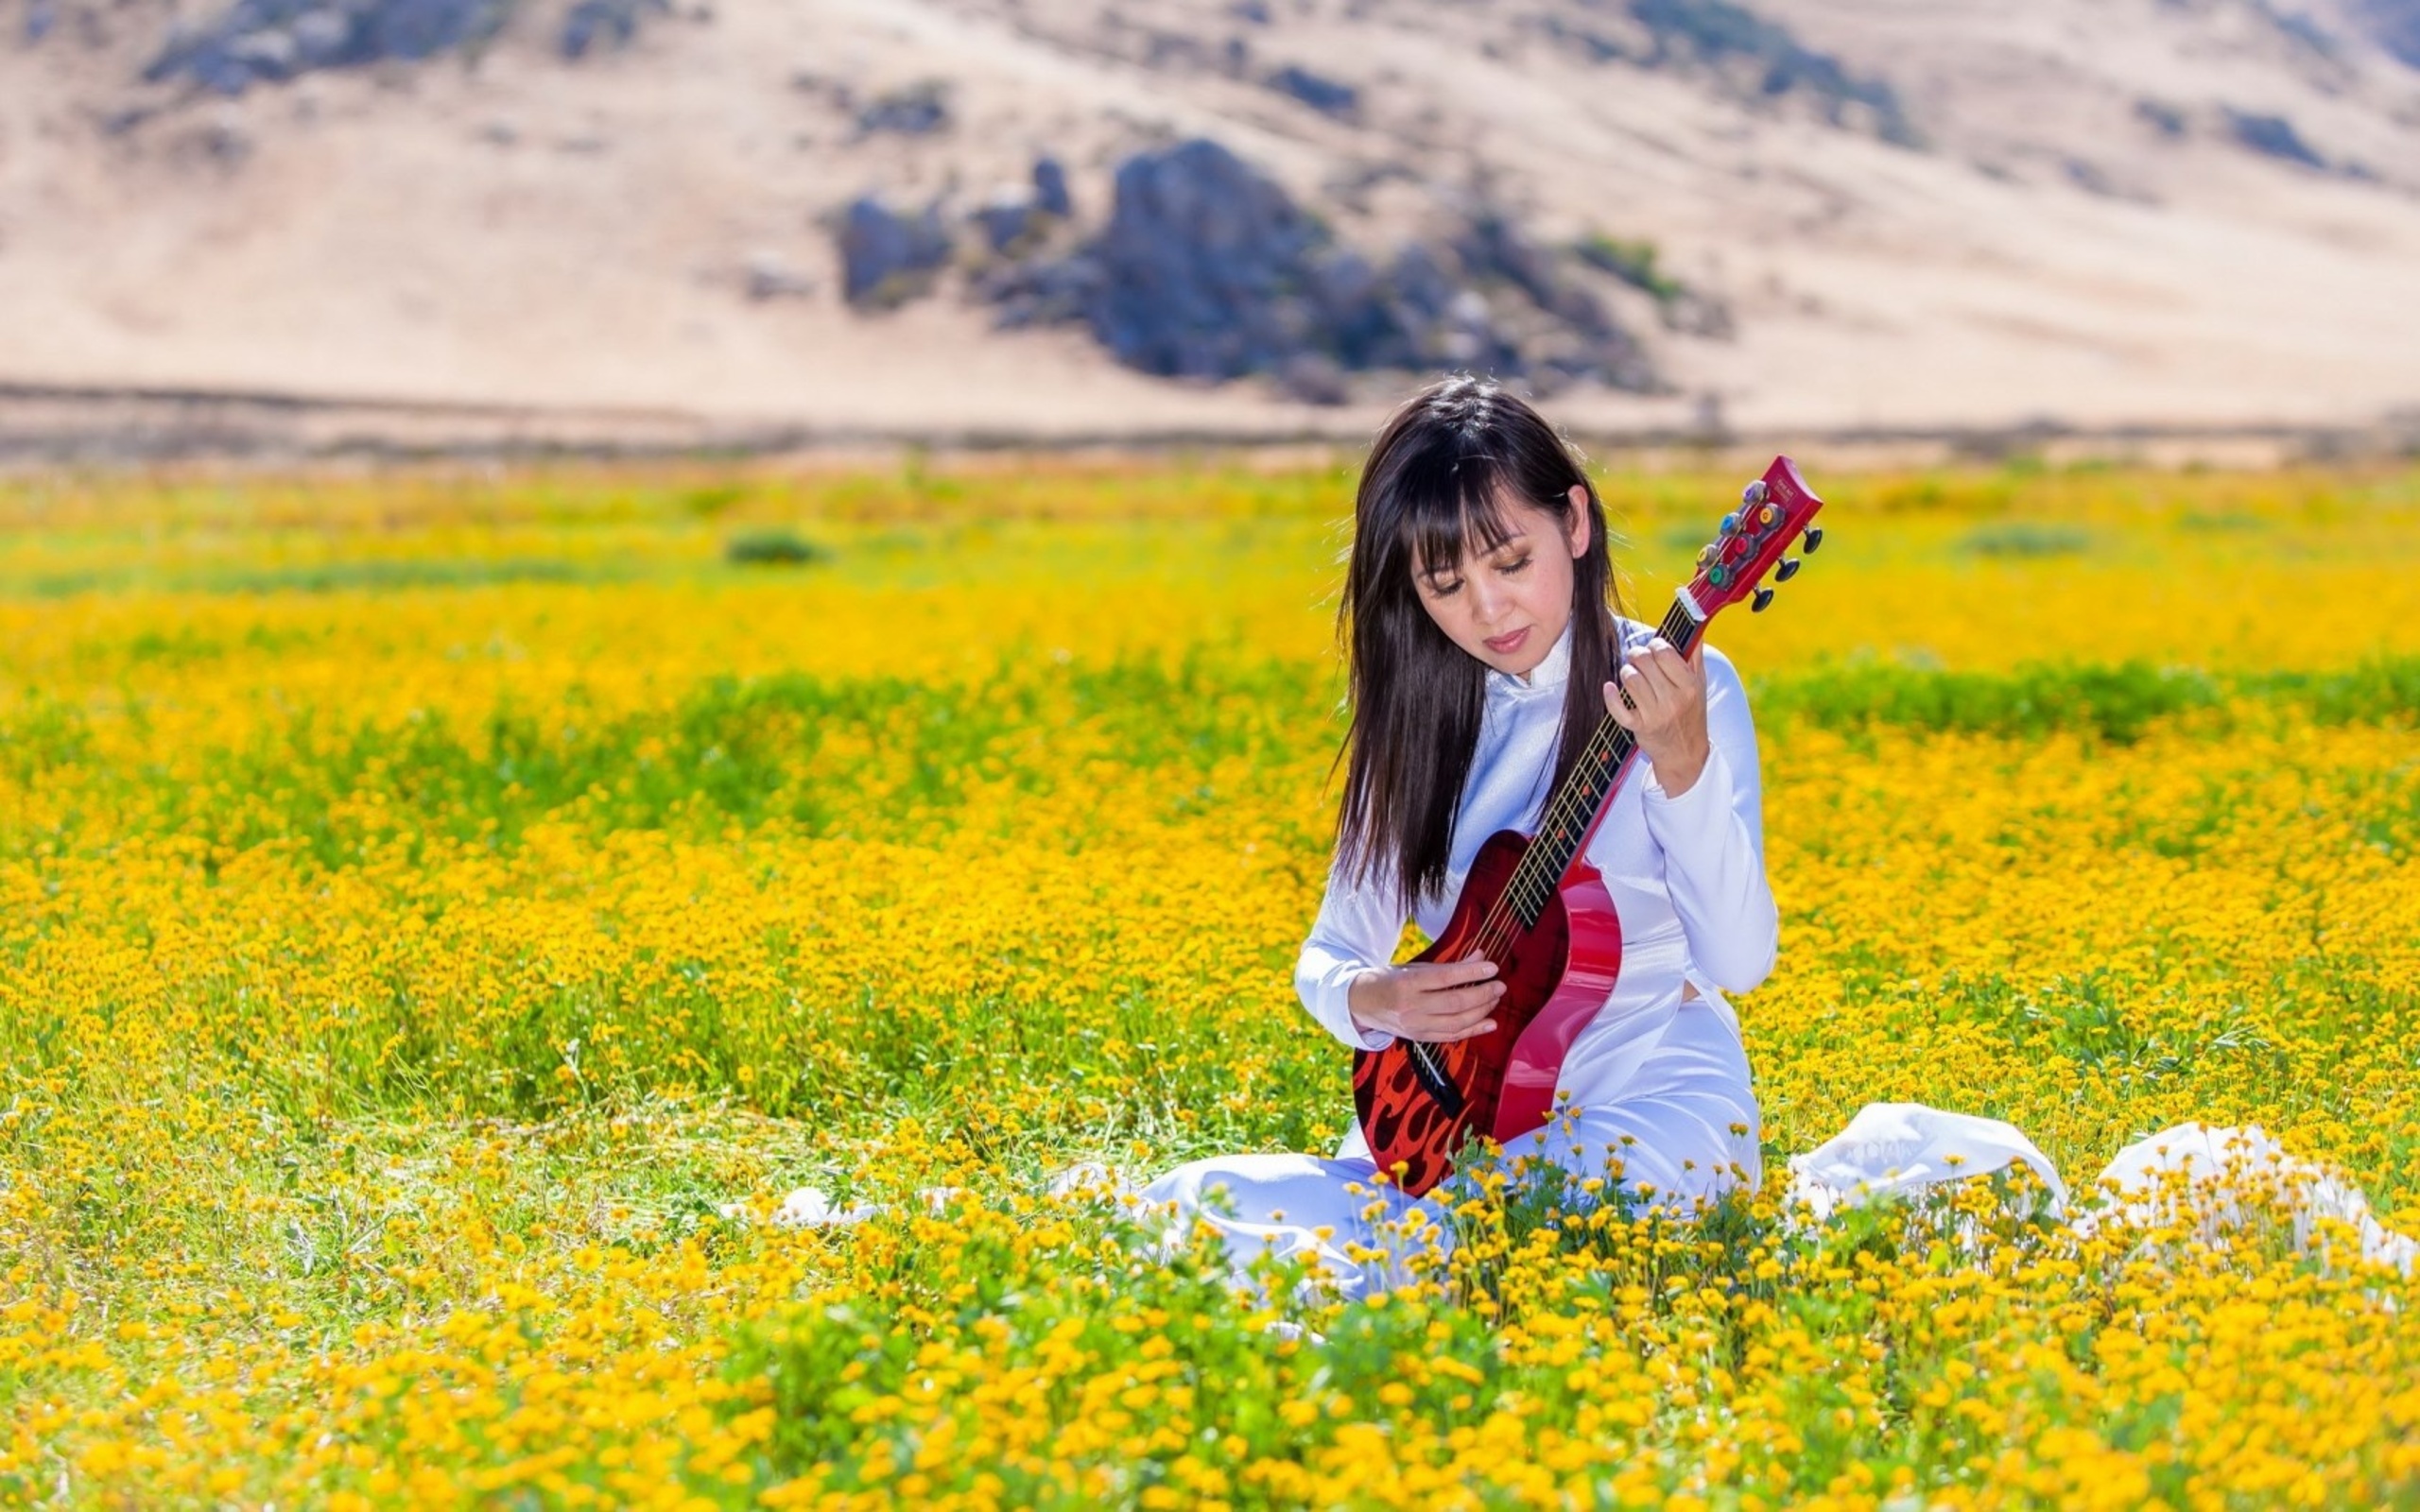 Исполнение песни лето. Девушка с гитарой. Фотосессия в поле с гитарой. Девушка с гитарой в поле. Девушка с гитарой на природе.